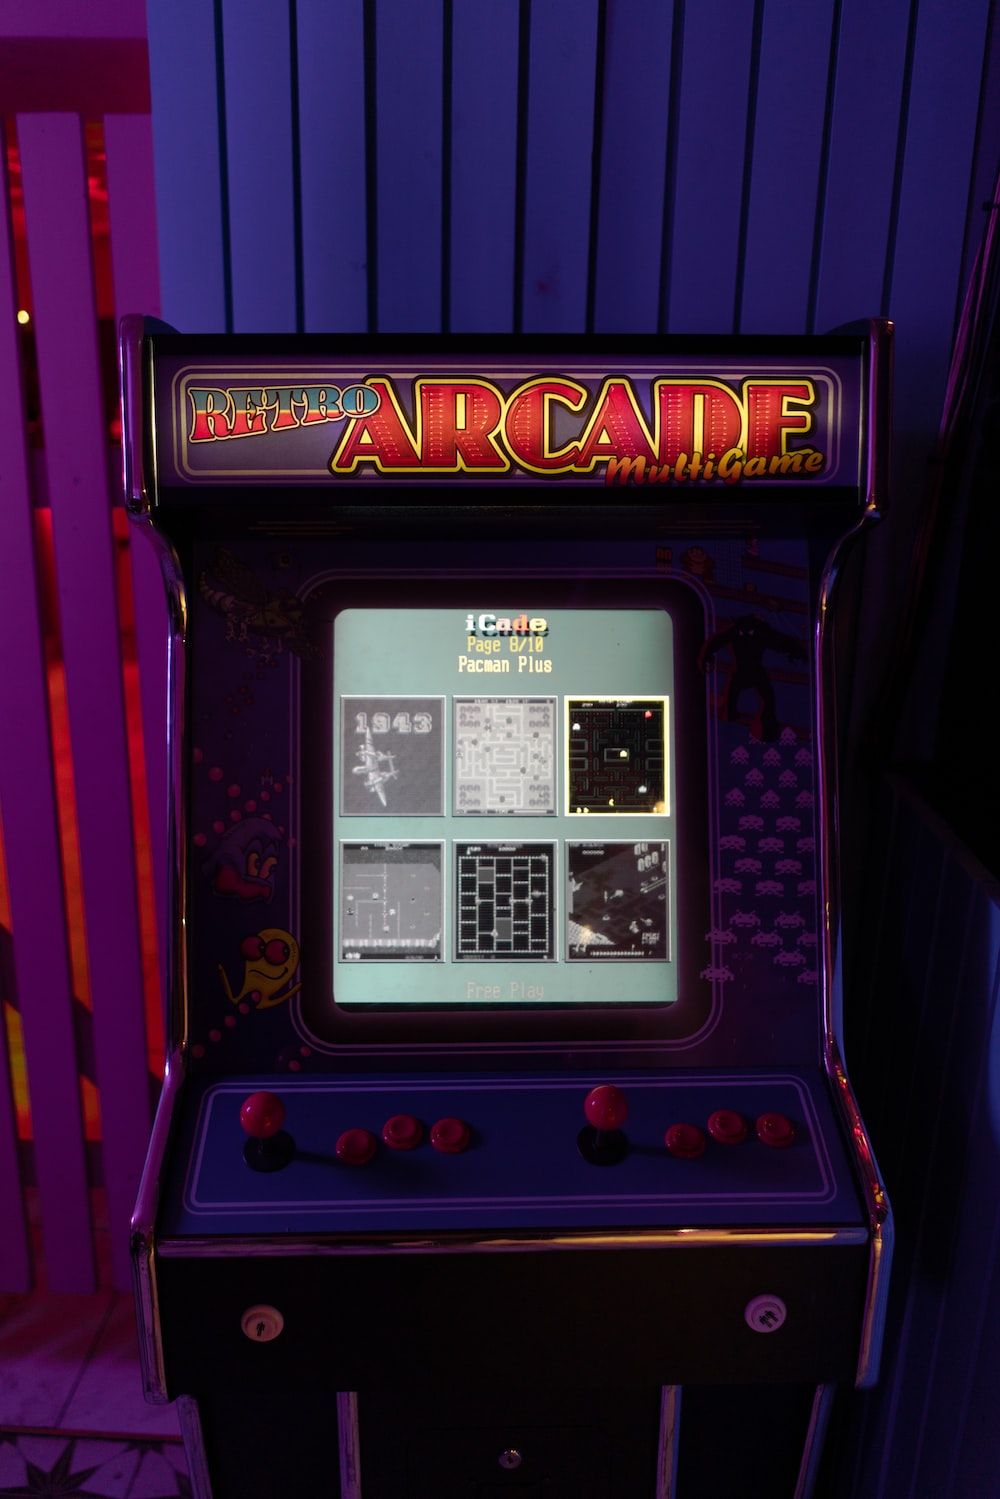 A bar top arcade machine with a purple neon light on top. - Arcade